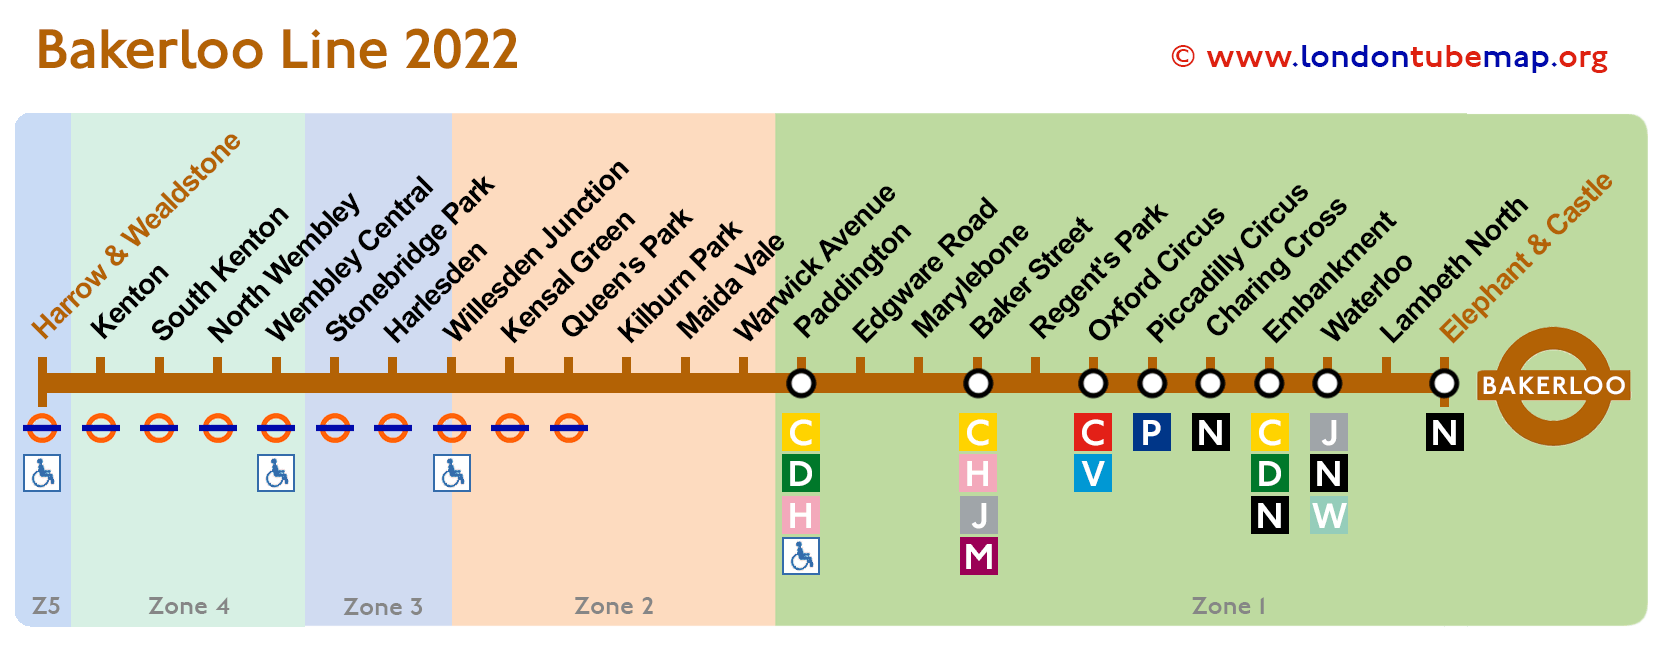 Bakerloo line 2022